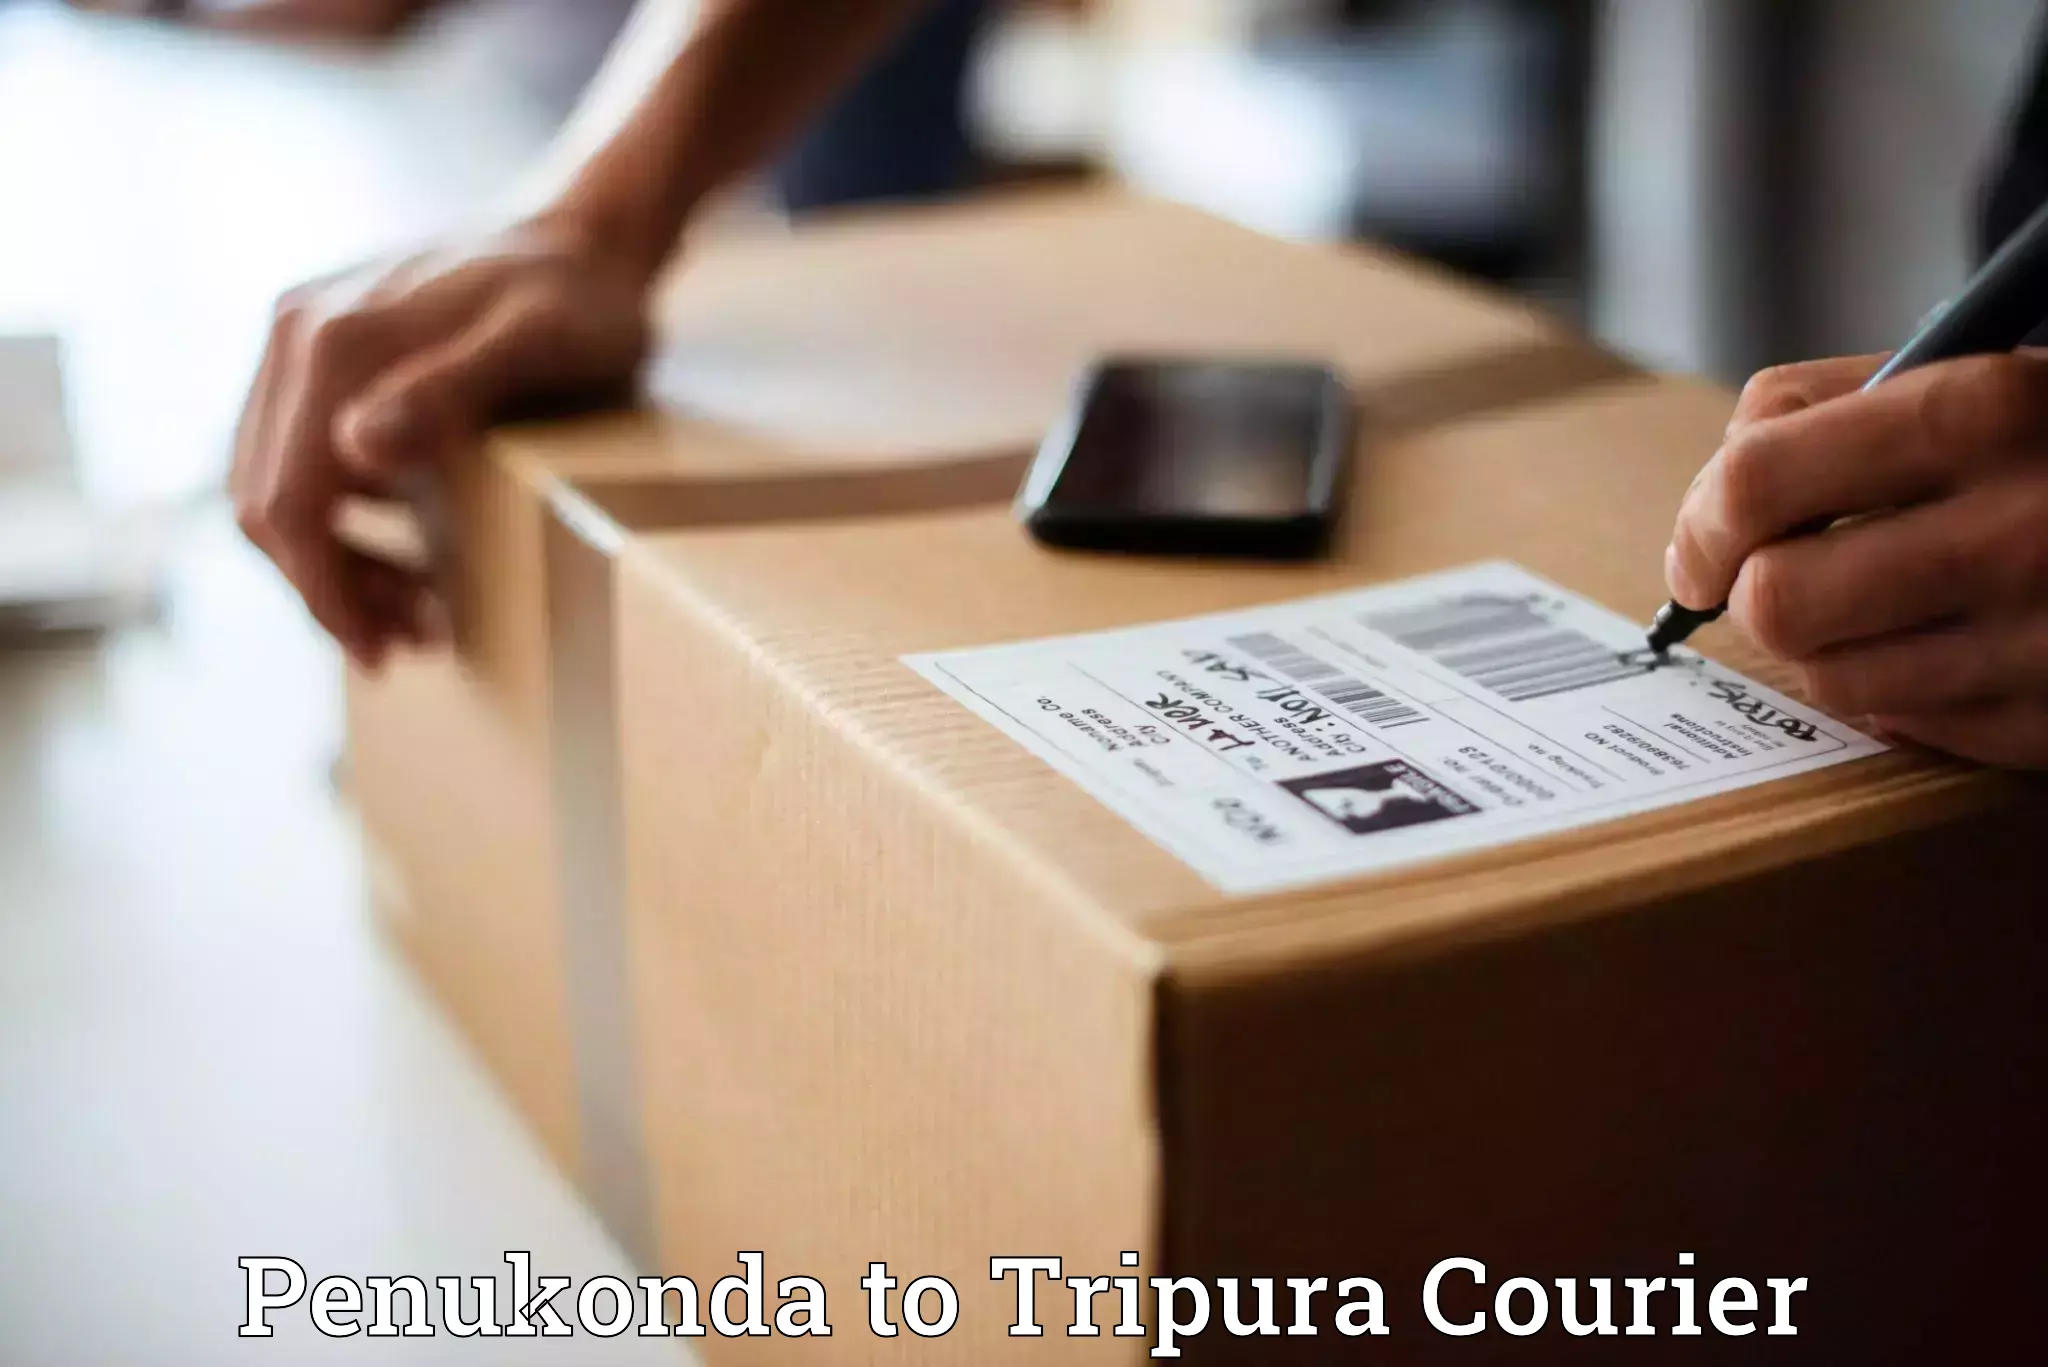 Efficient order fulfillment Penukonda to Tripura